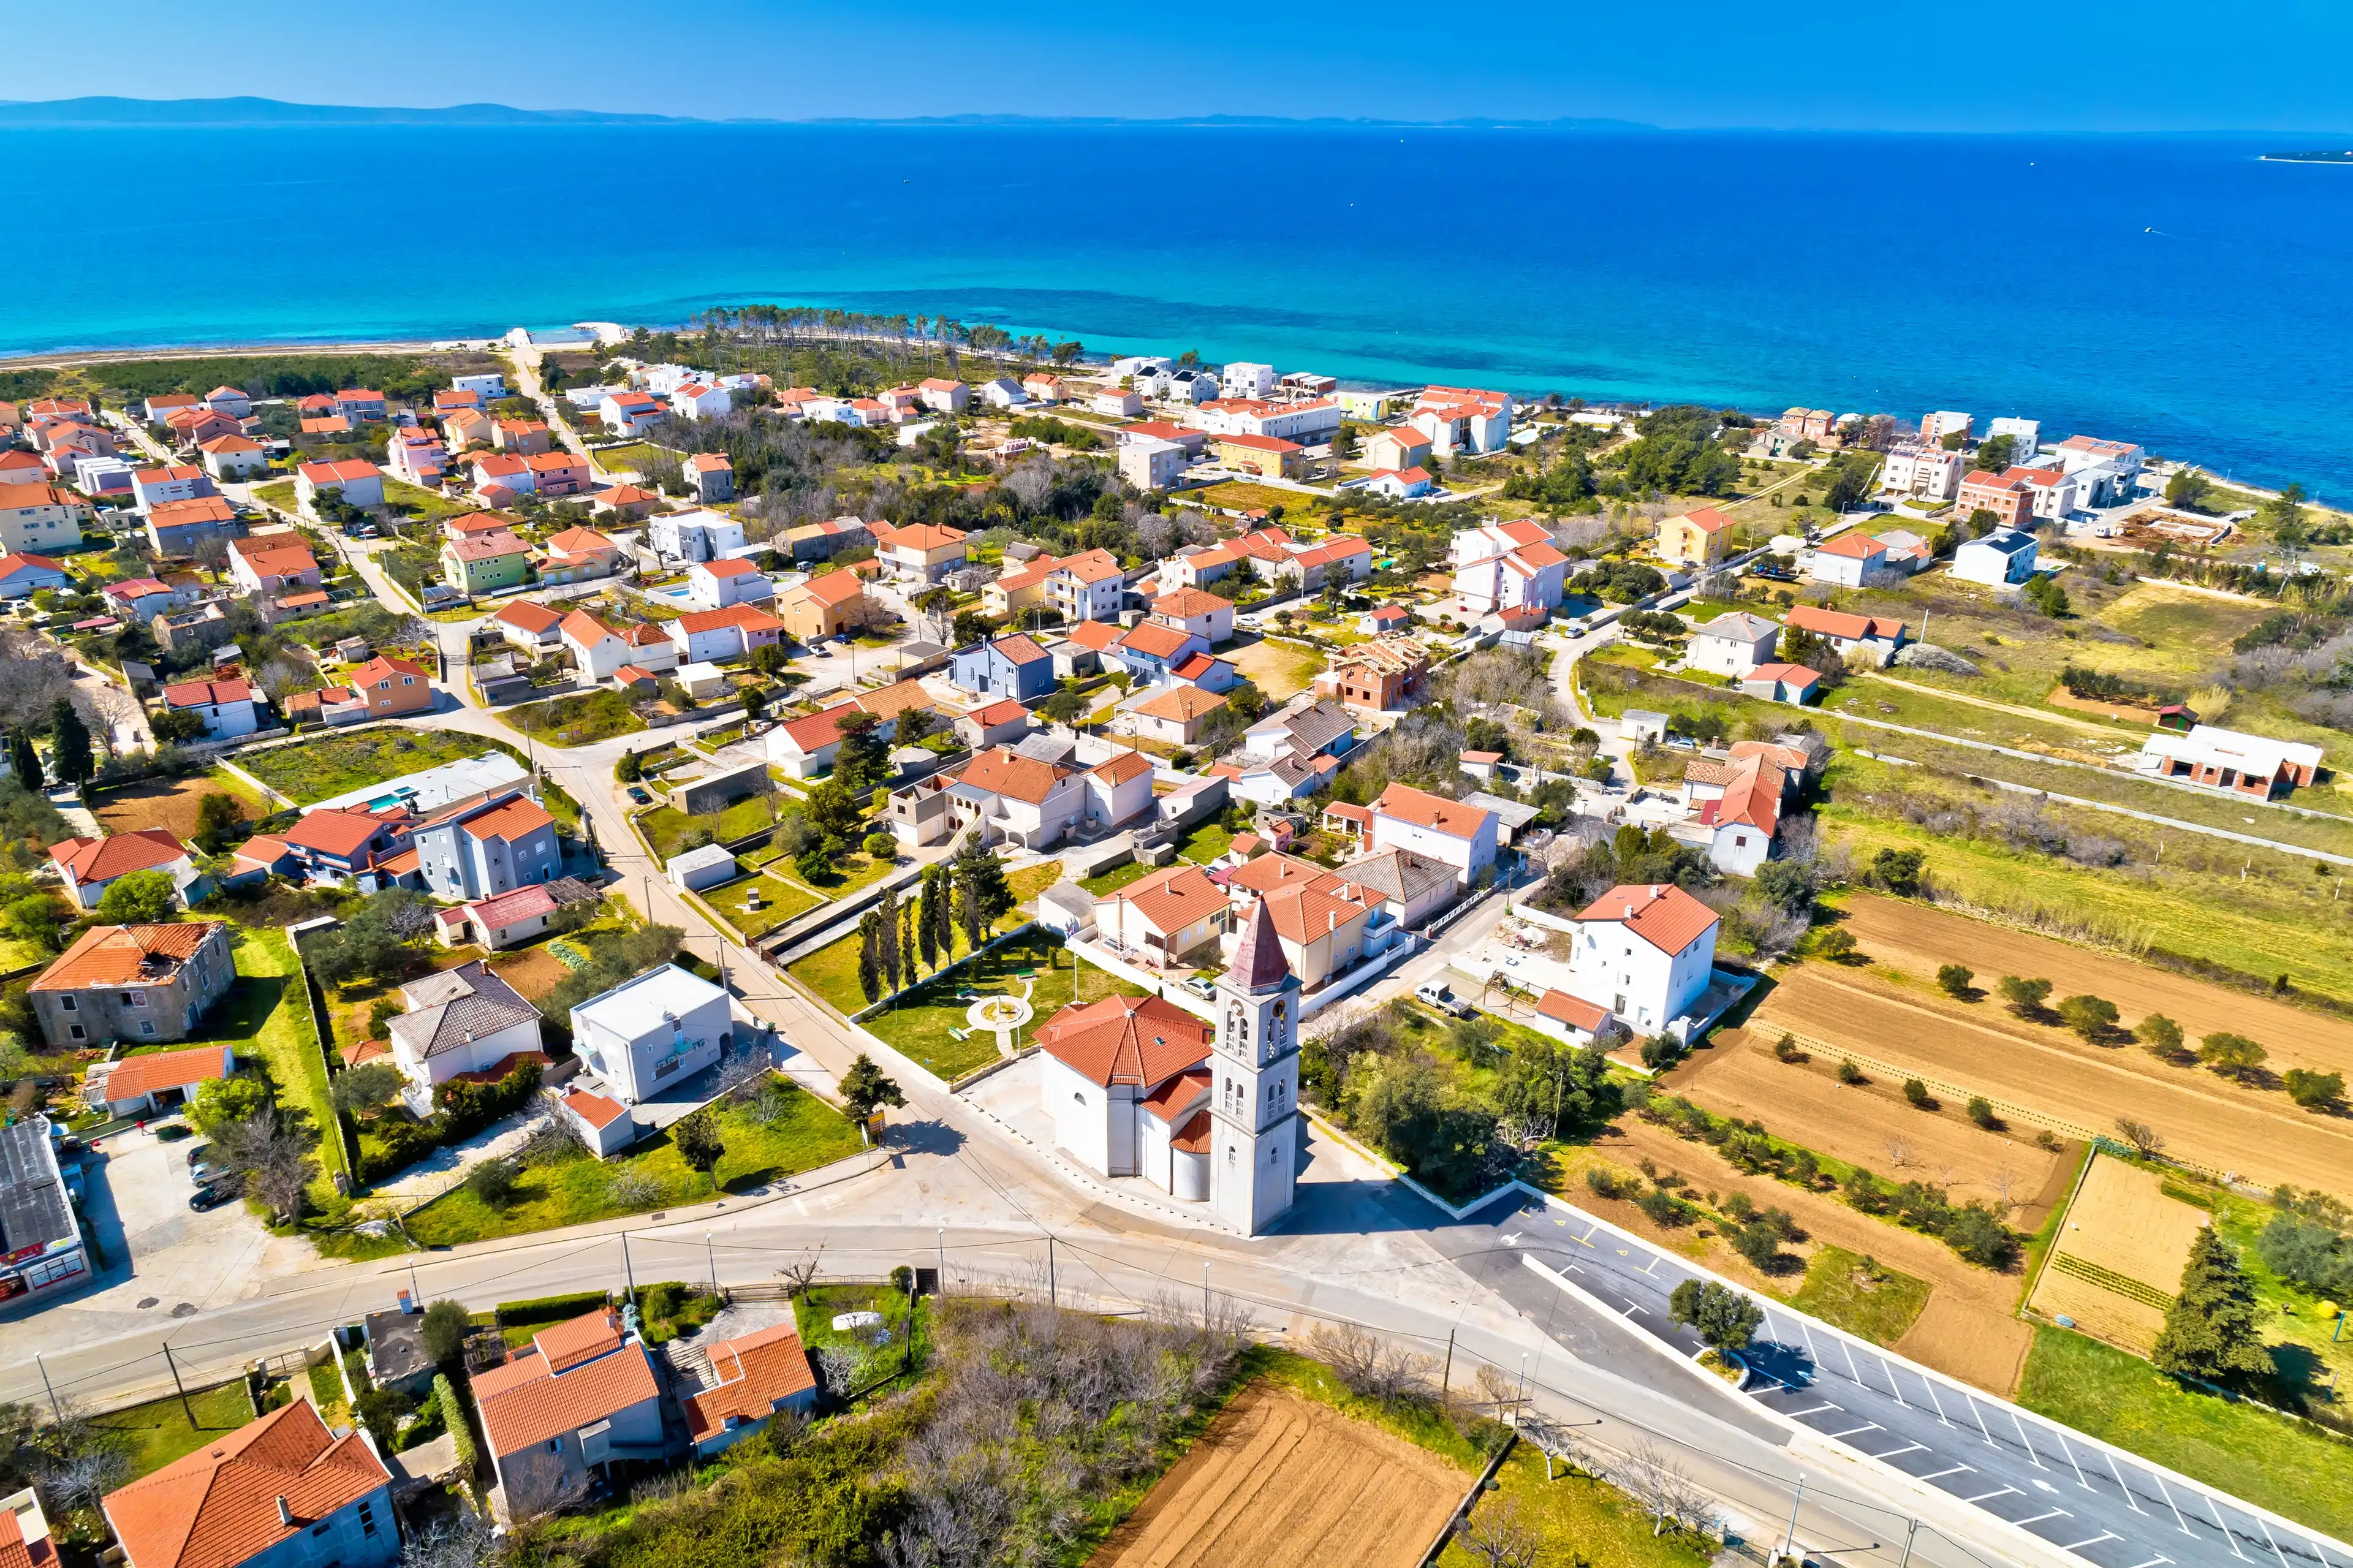 Privlaka village near Zadar tourist destination church and waterfront aerial view, Dalmatia region of Croatia